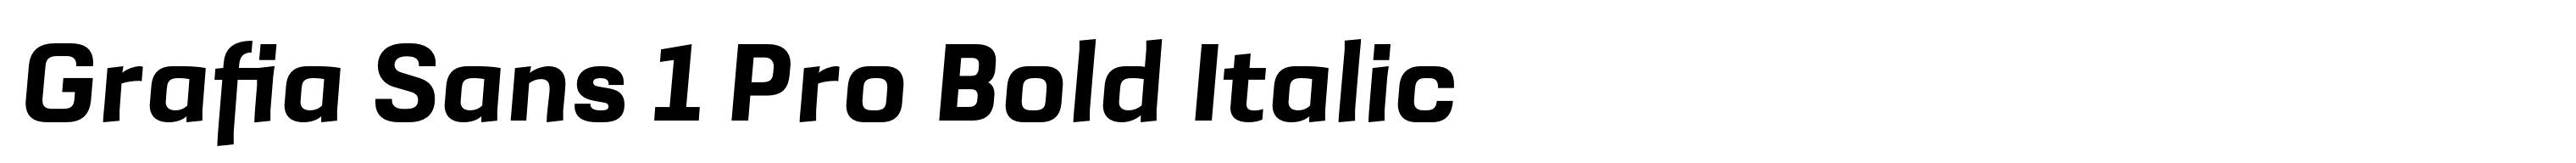 Grafia Sans 1 Pro Bold Italic